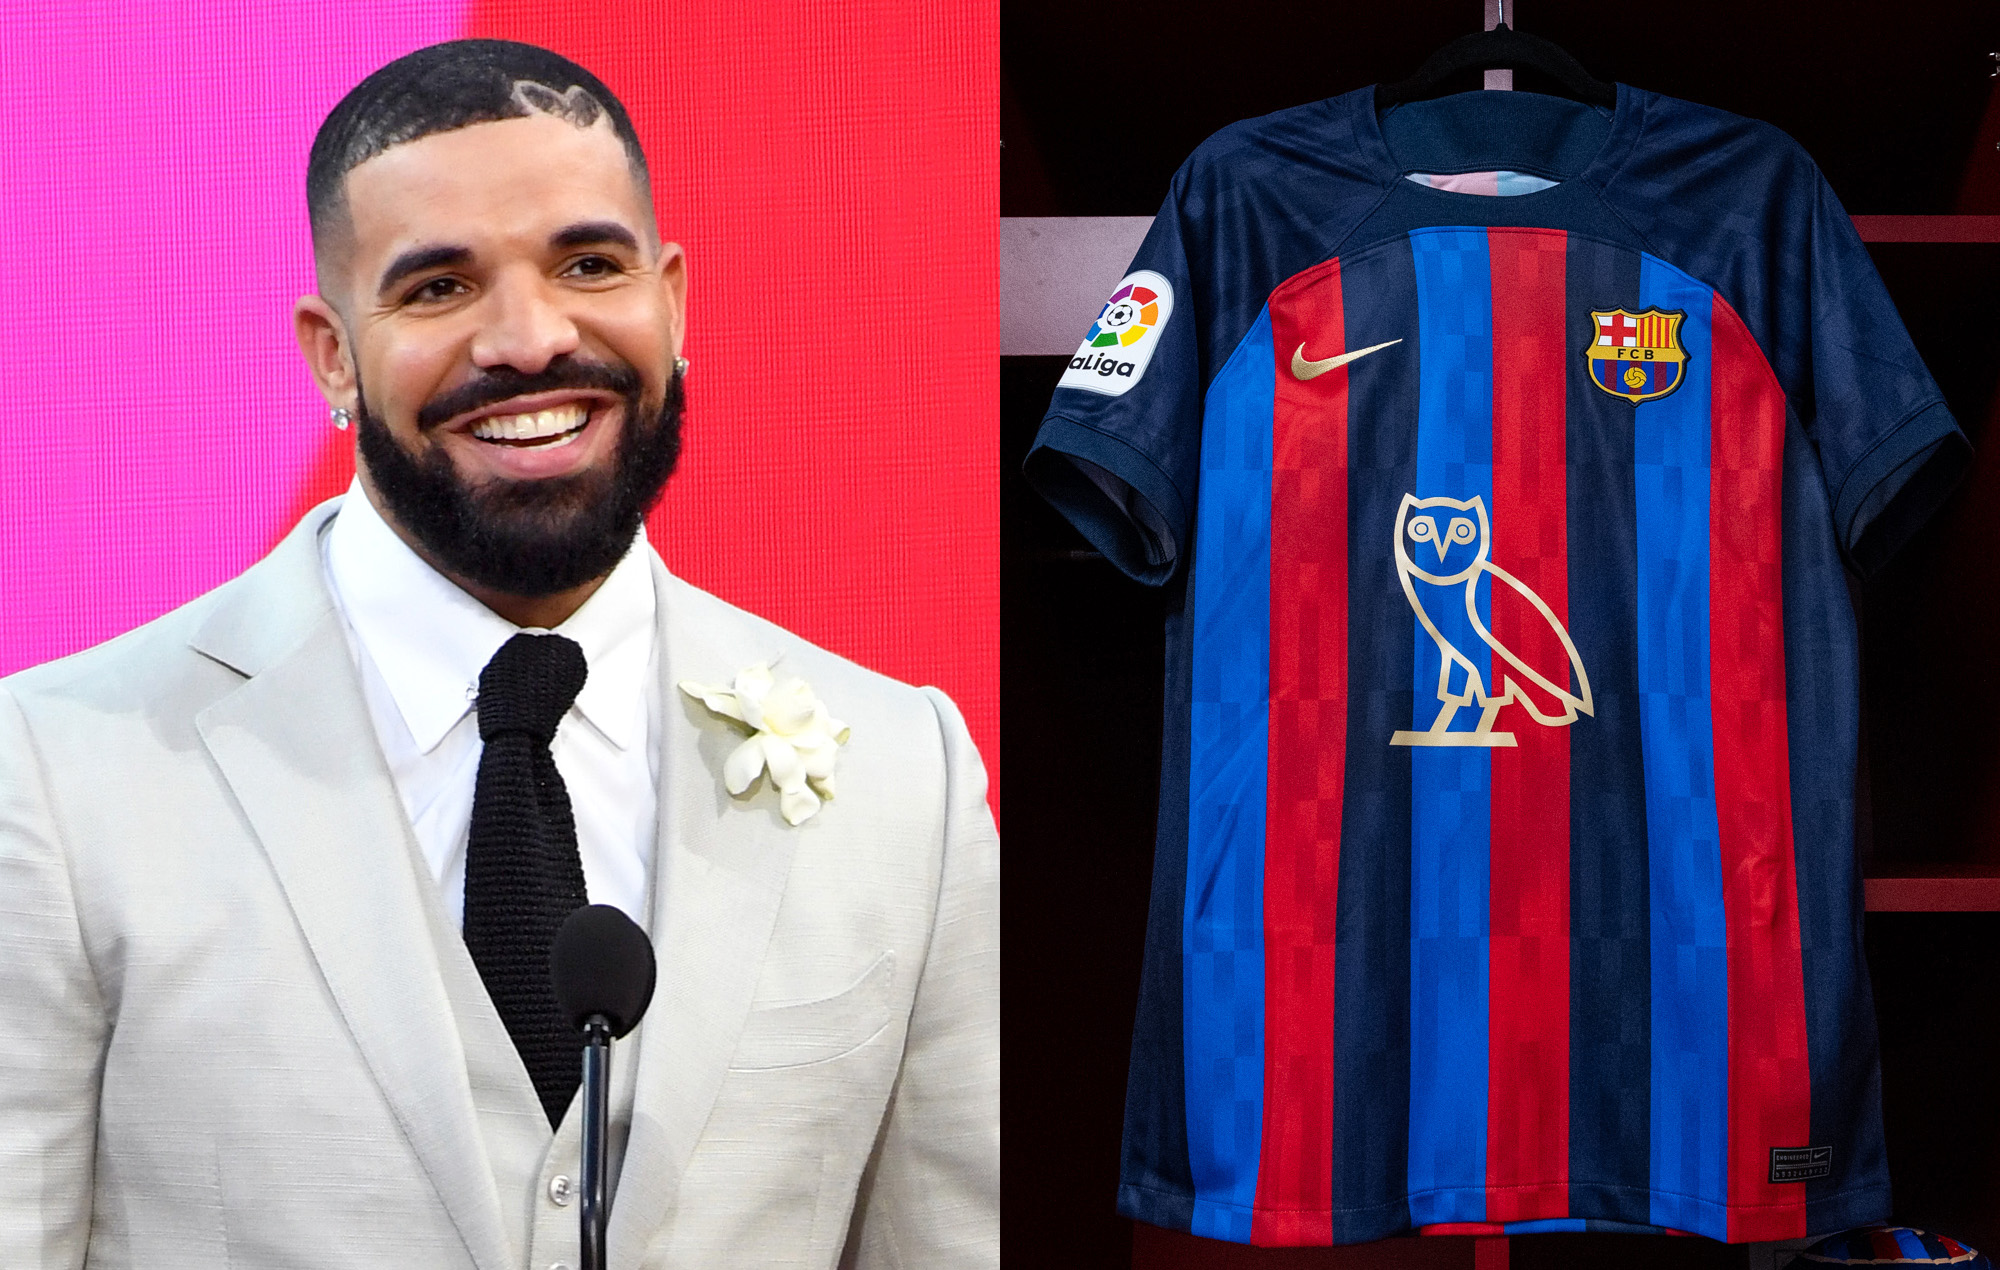 Barca to wear kit bearing Drake’s OVO Sound logo in Real Madrid match this weekend